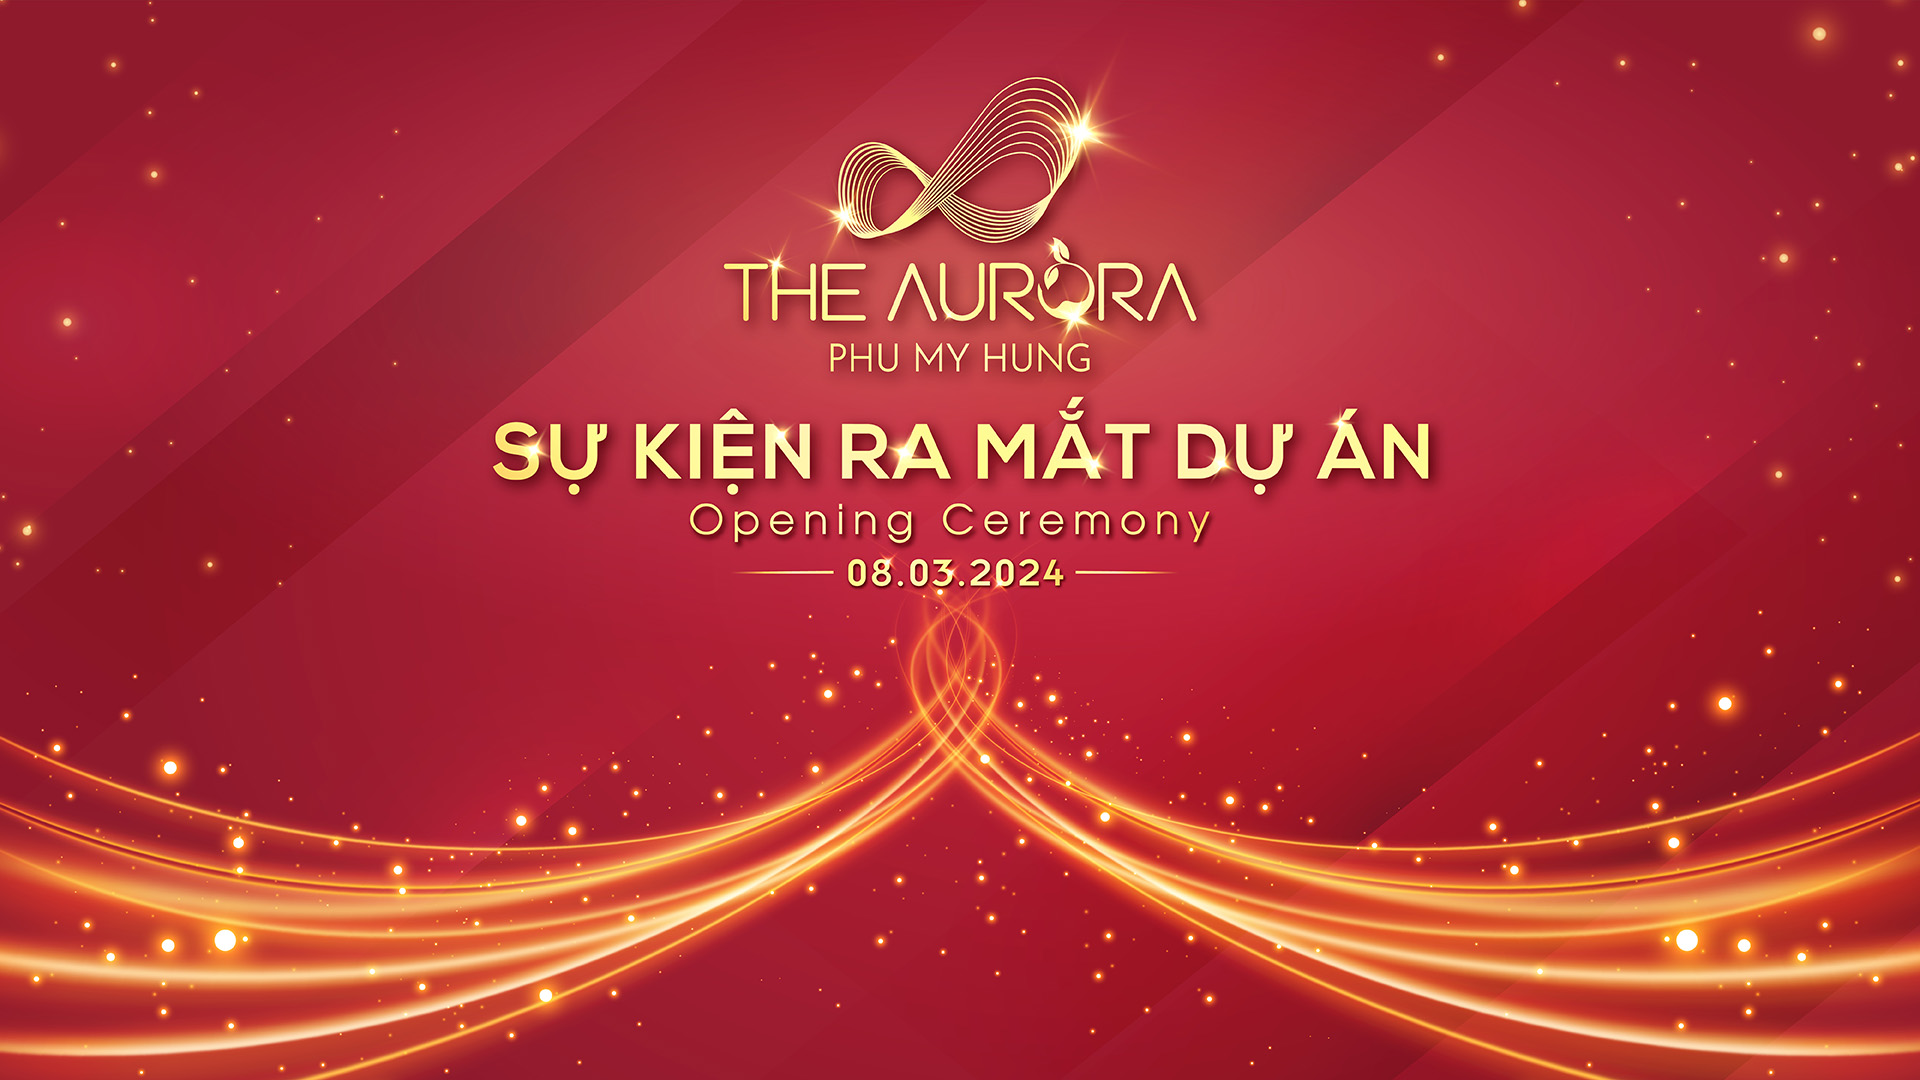 Opening ceremony of Phu My Hung The Aurora